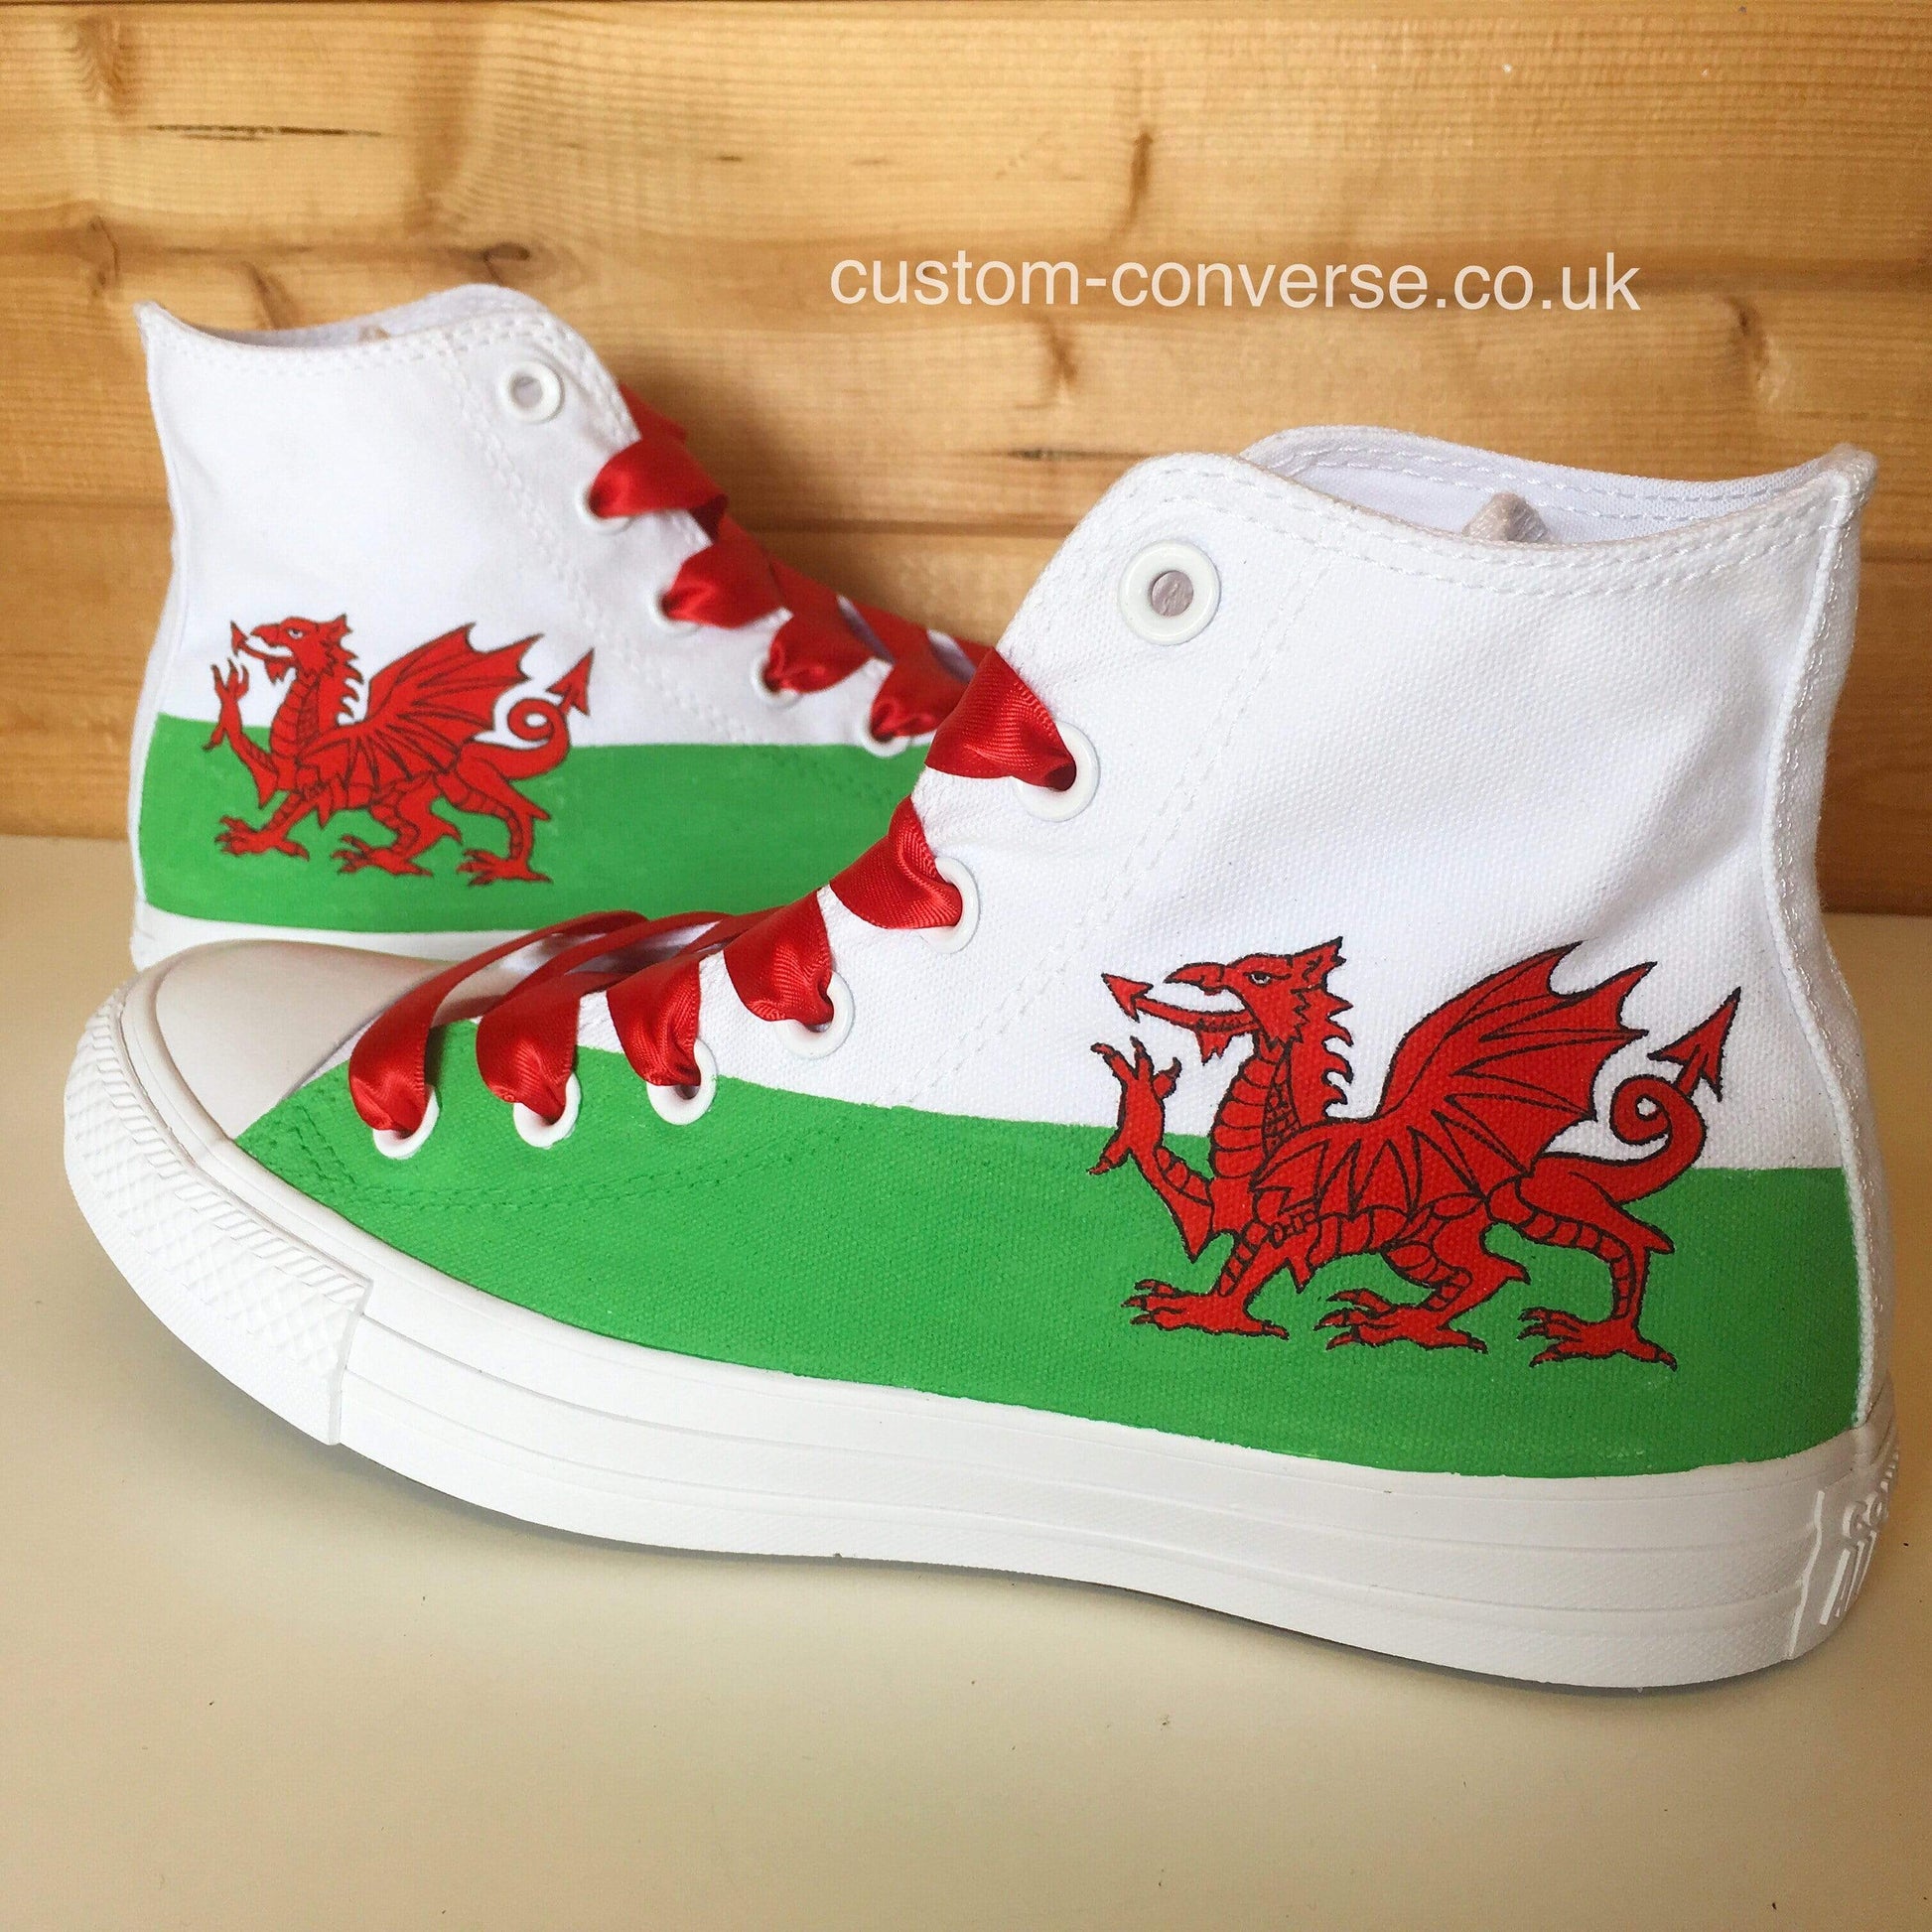 Welsh Flag - Custom Converse Ltd.